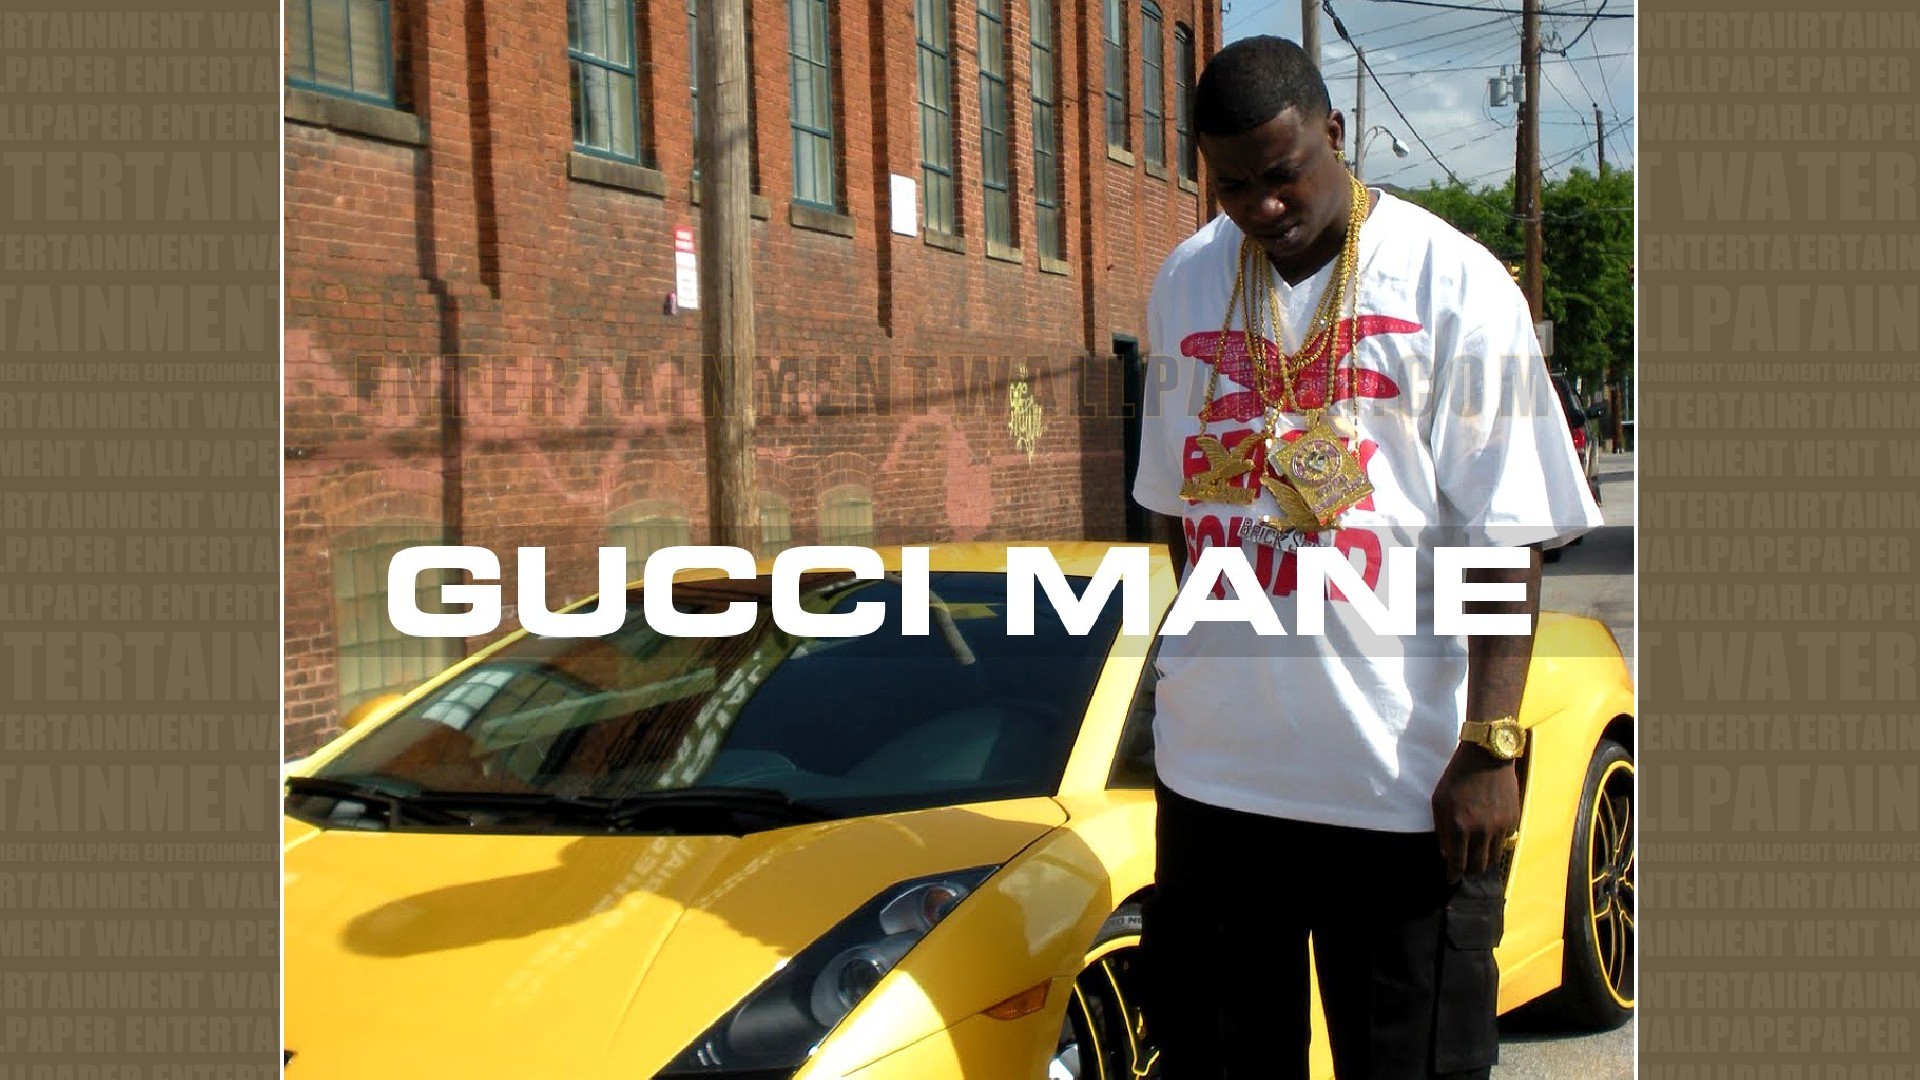 1920x1080 Gucci Mane Wallpaper - Original size, download now.